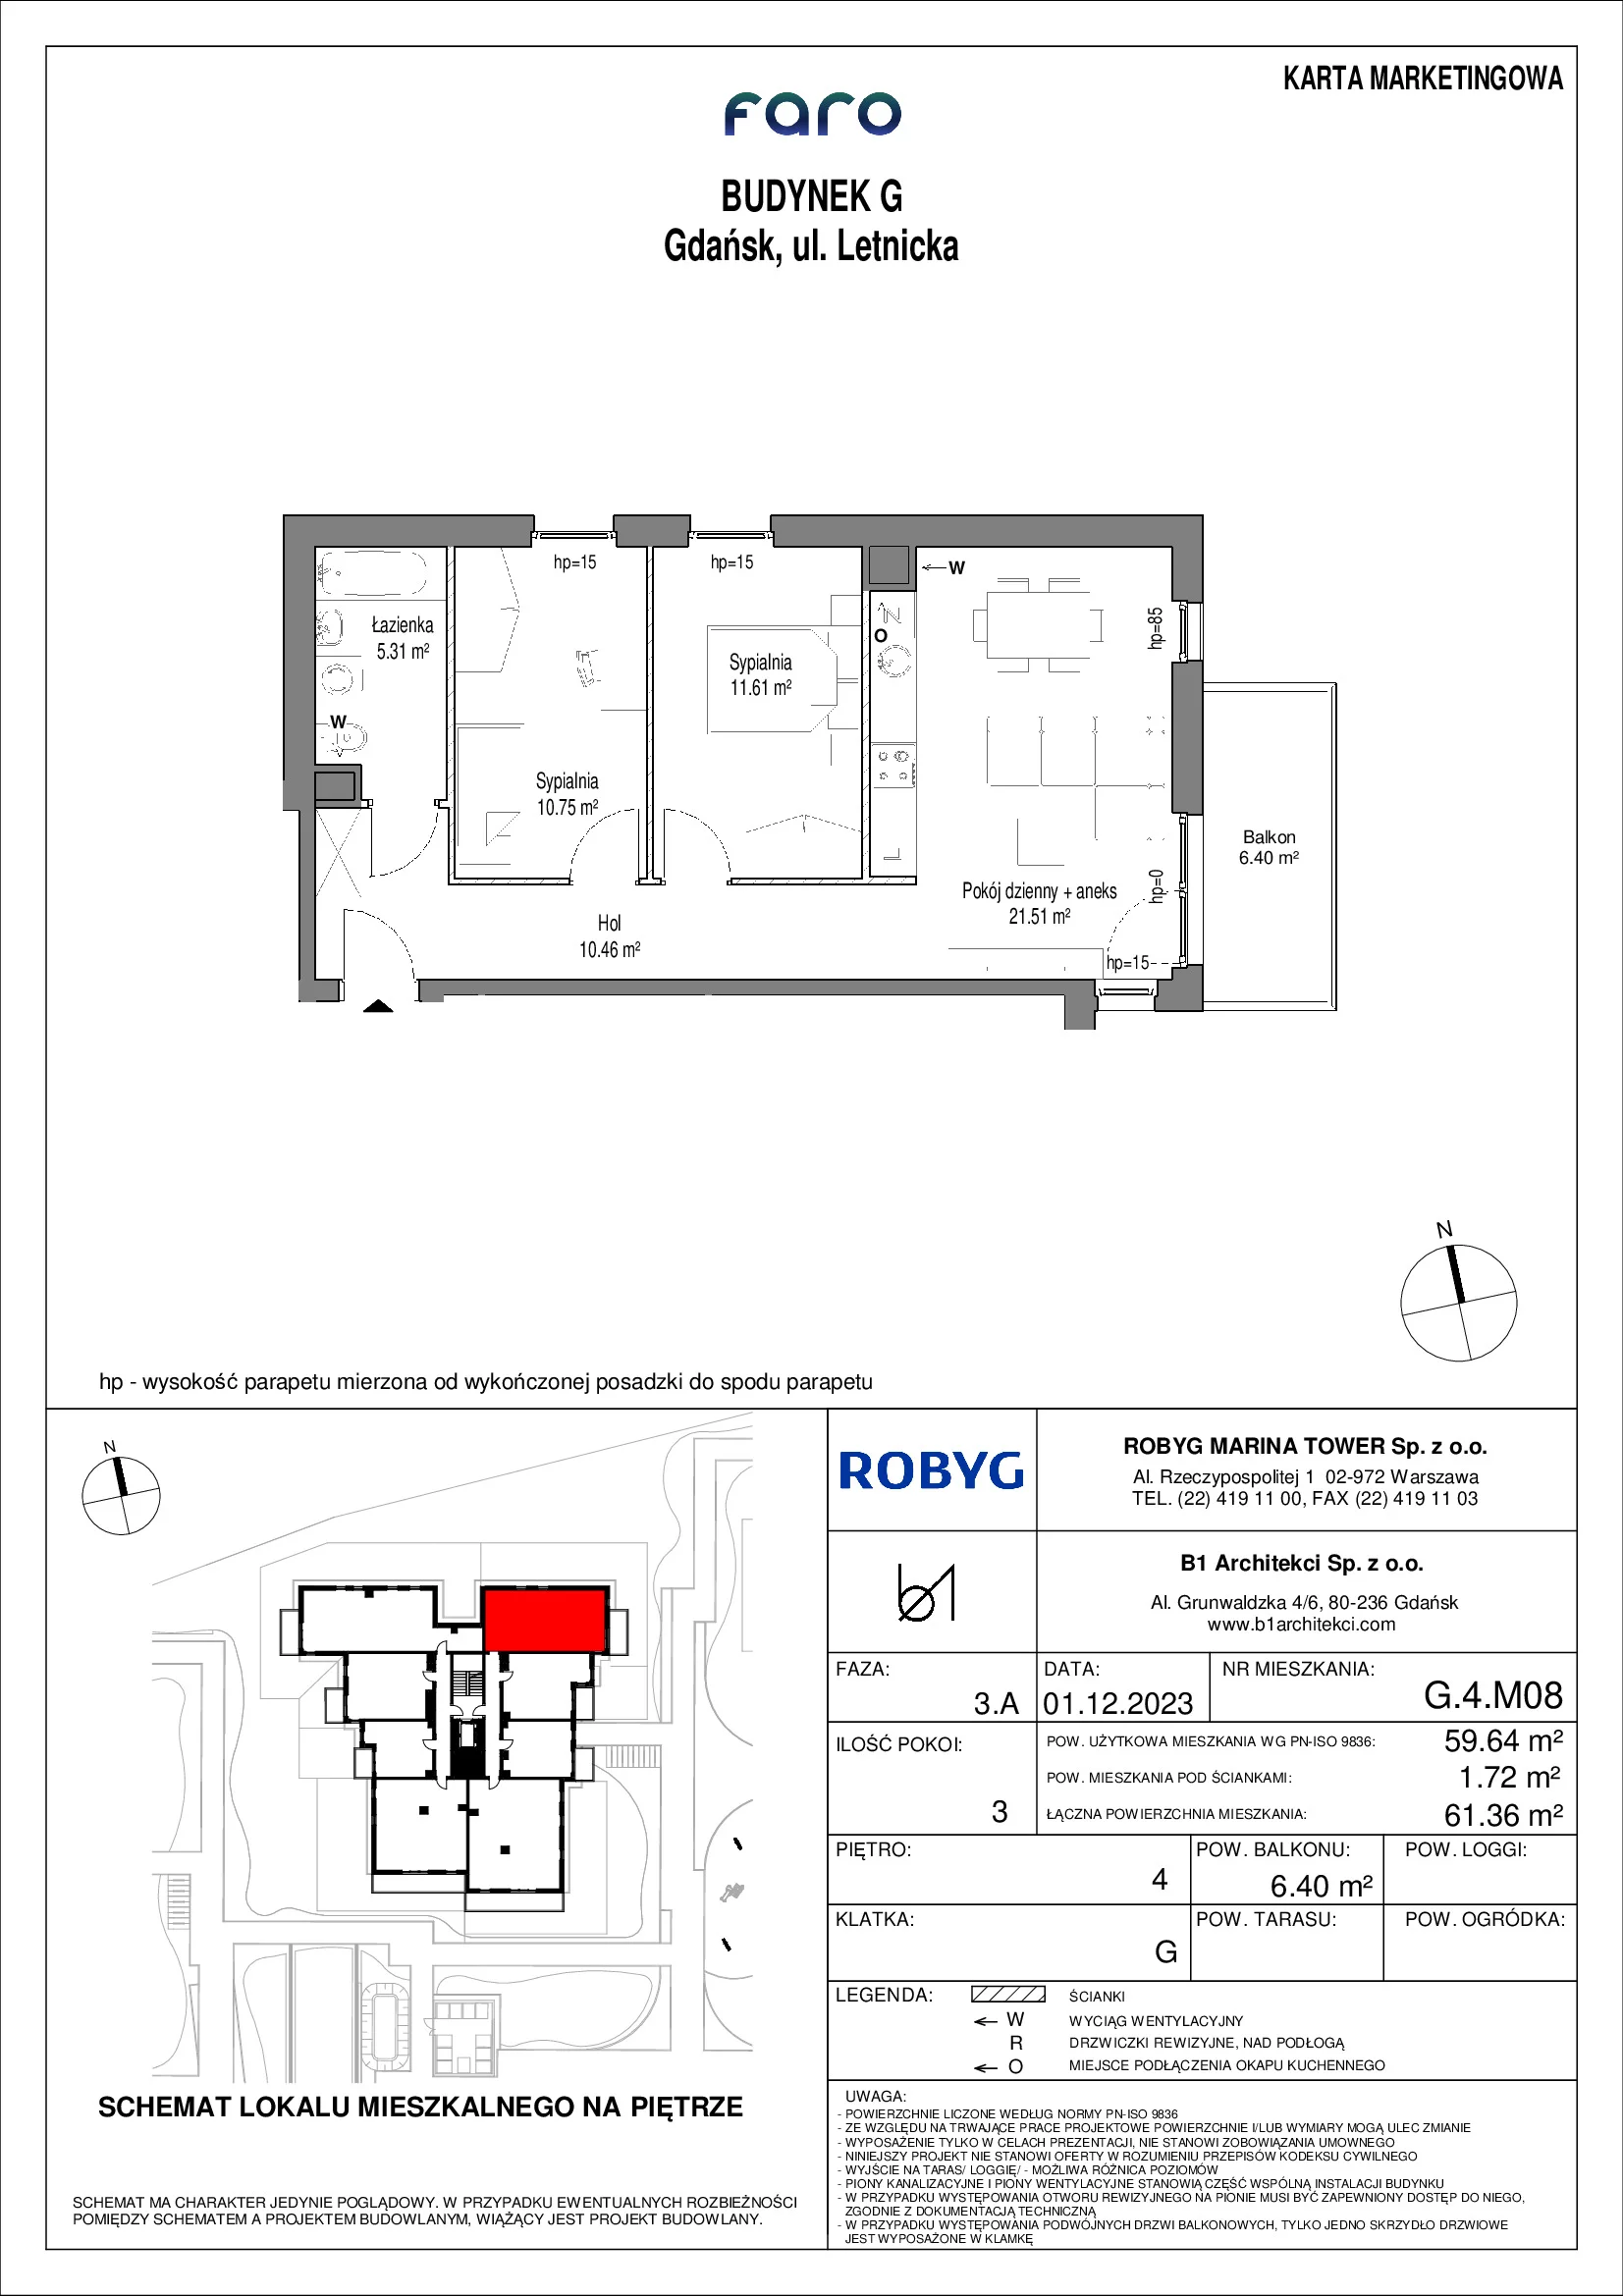 Mieszkanie 59,64 m², piętro 4, oferta nr G.4M08, FARO, Gdańsk, Nowy Port, ul. Letnicka